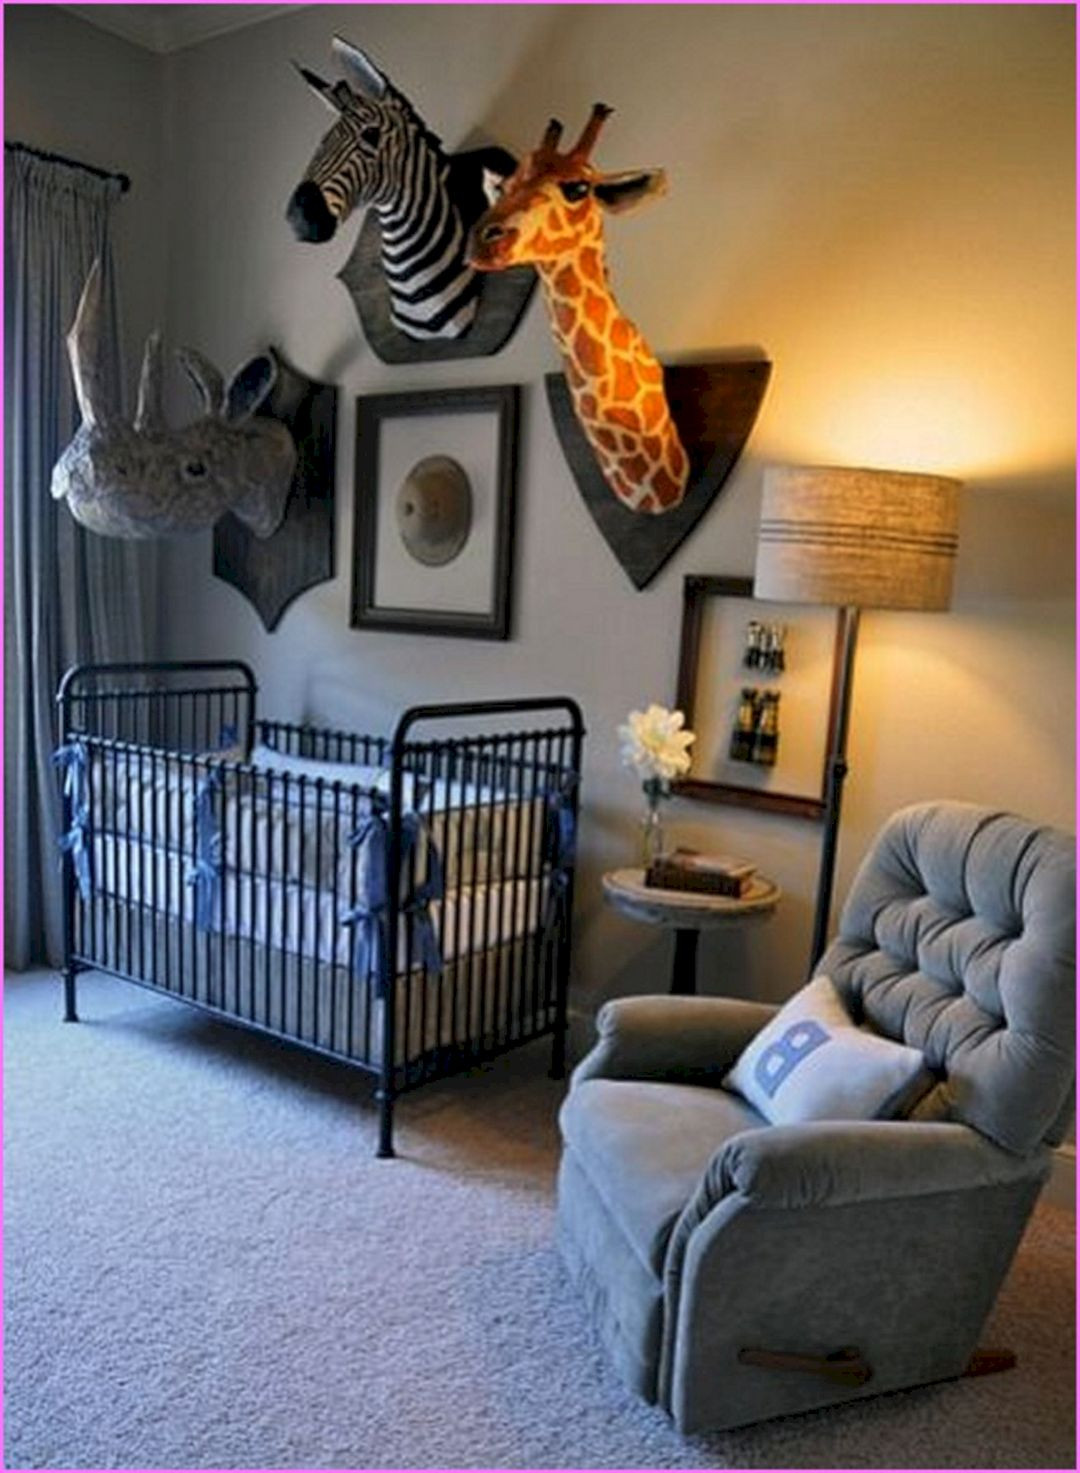 Baby Room Decoration Items
 Safari Baby Room Wall Decor Ideas Safari Baby Room Wall